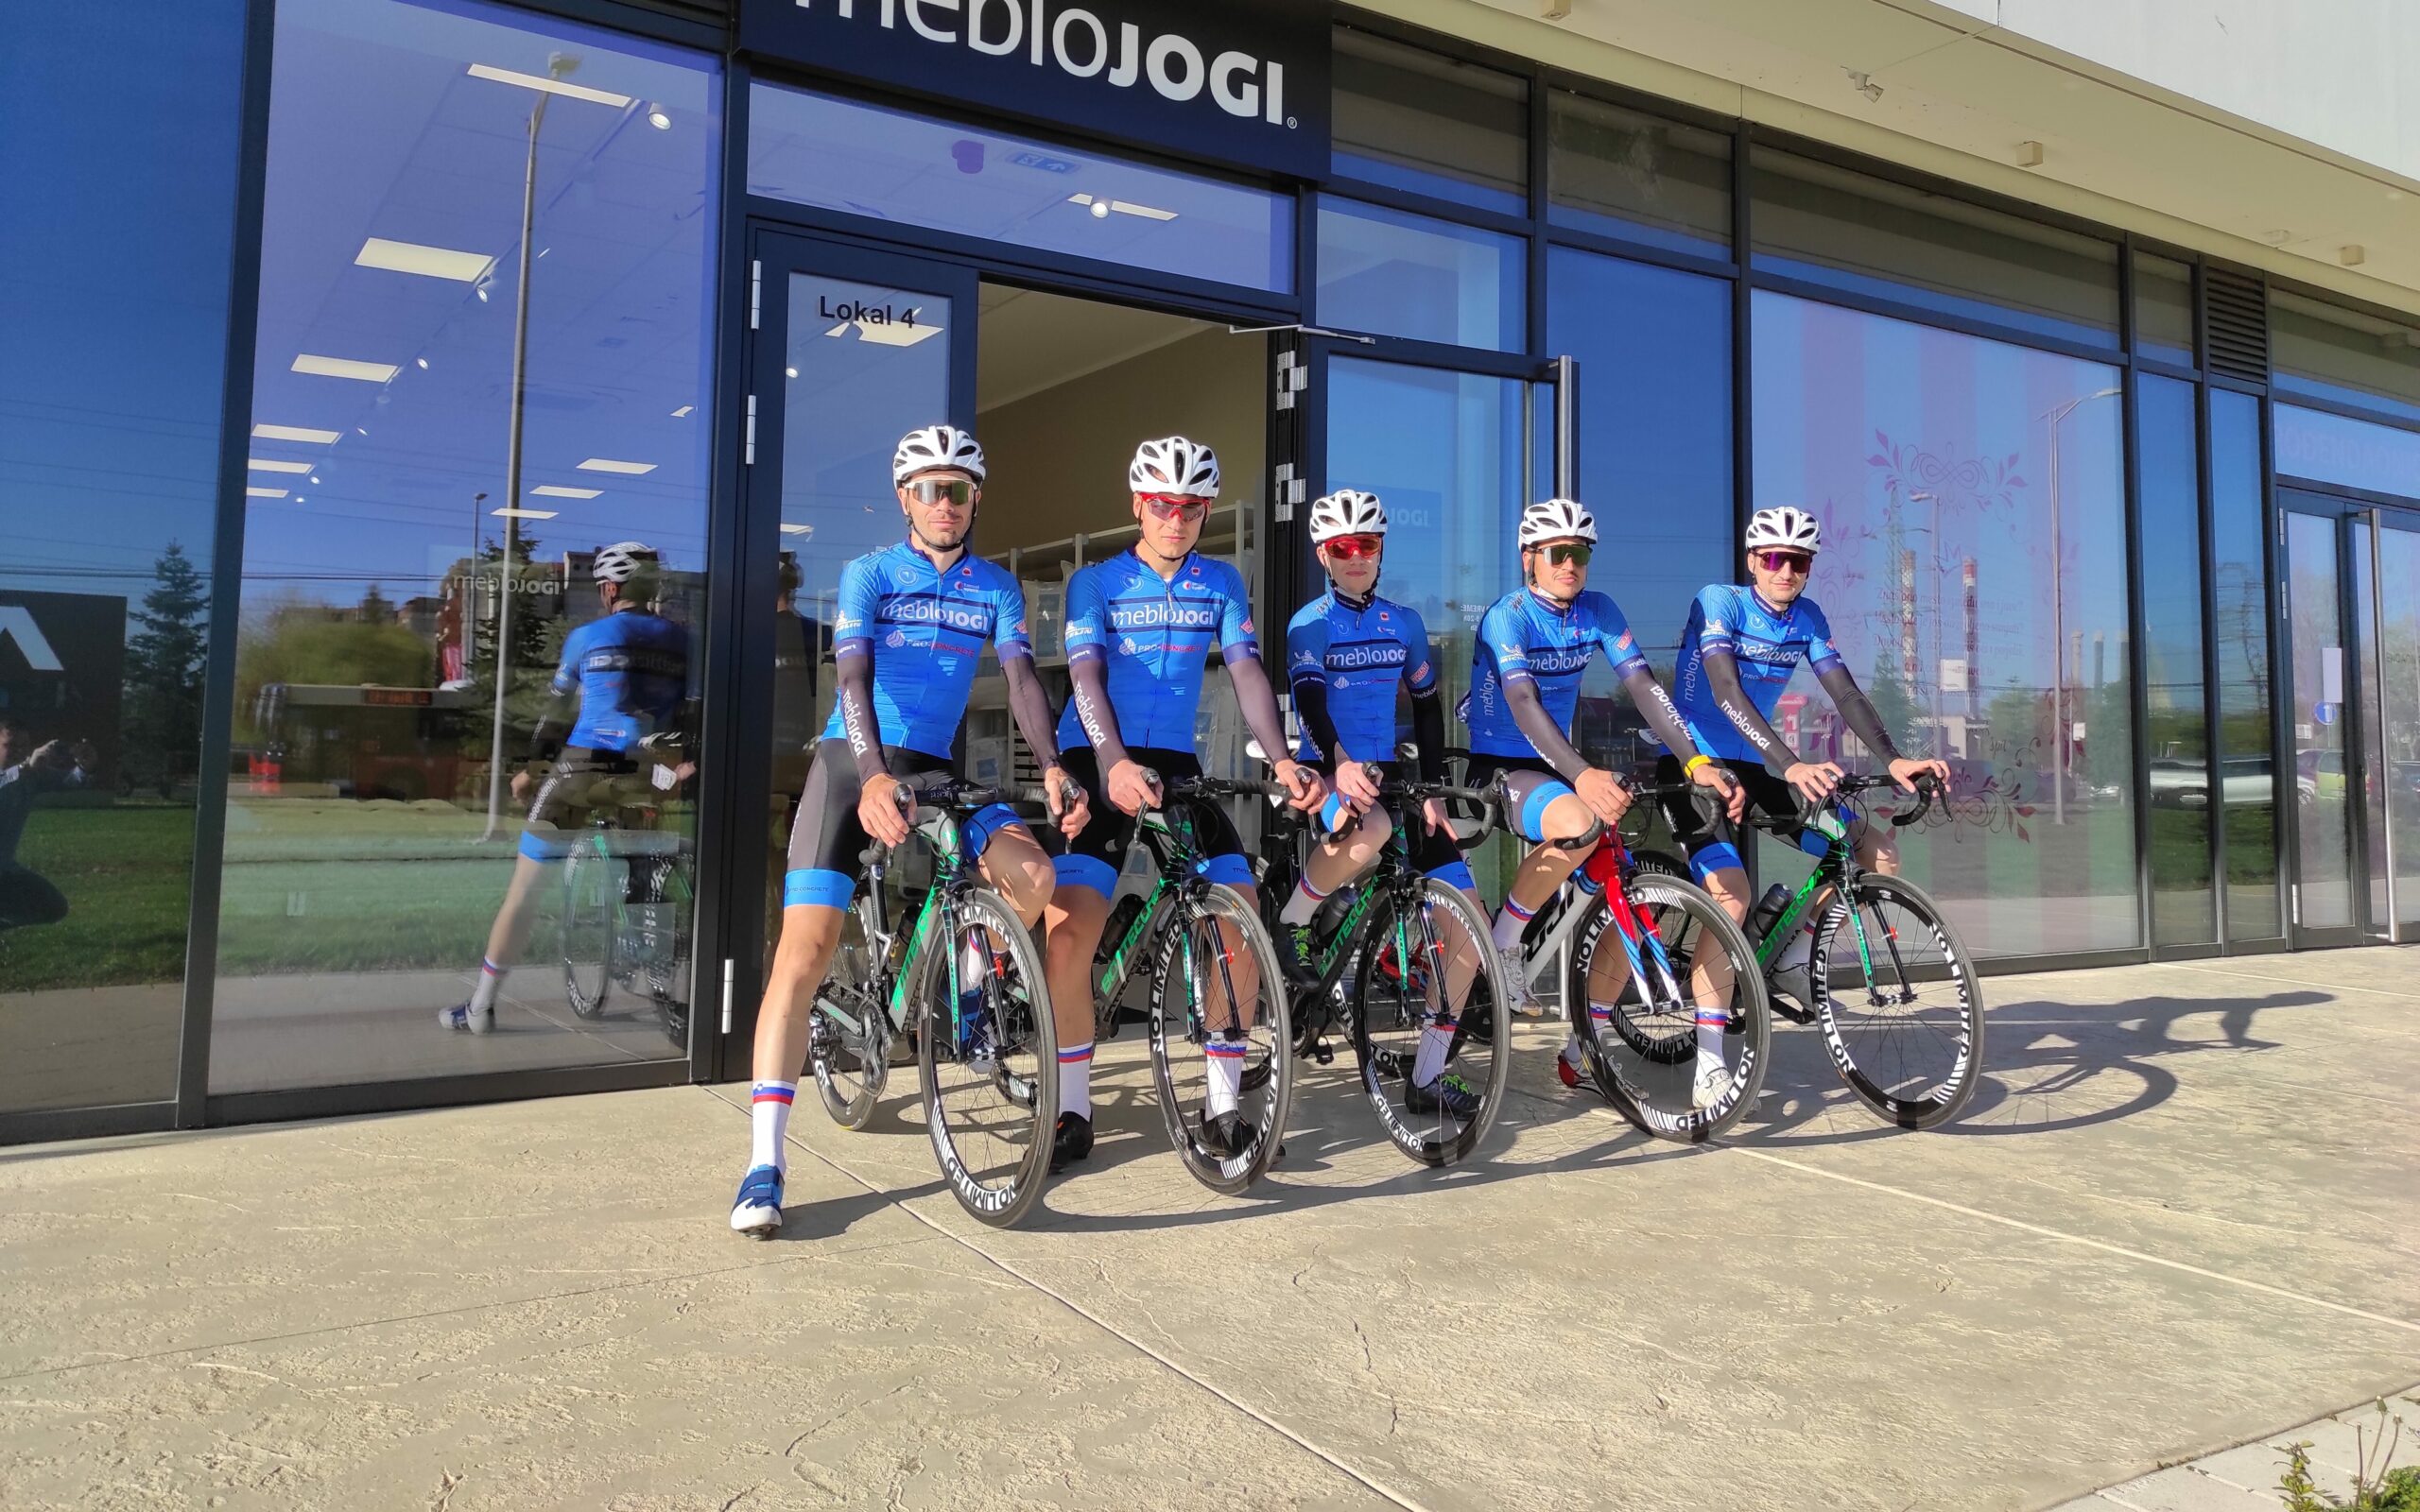 Kolesarski klub Nova Gorica mebloJOGI Cycling Team